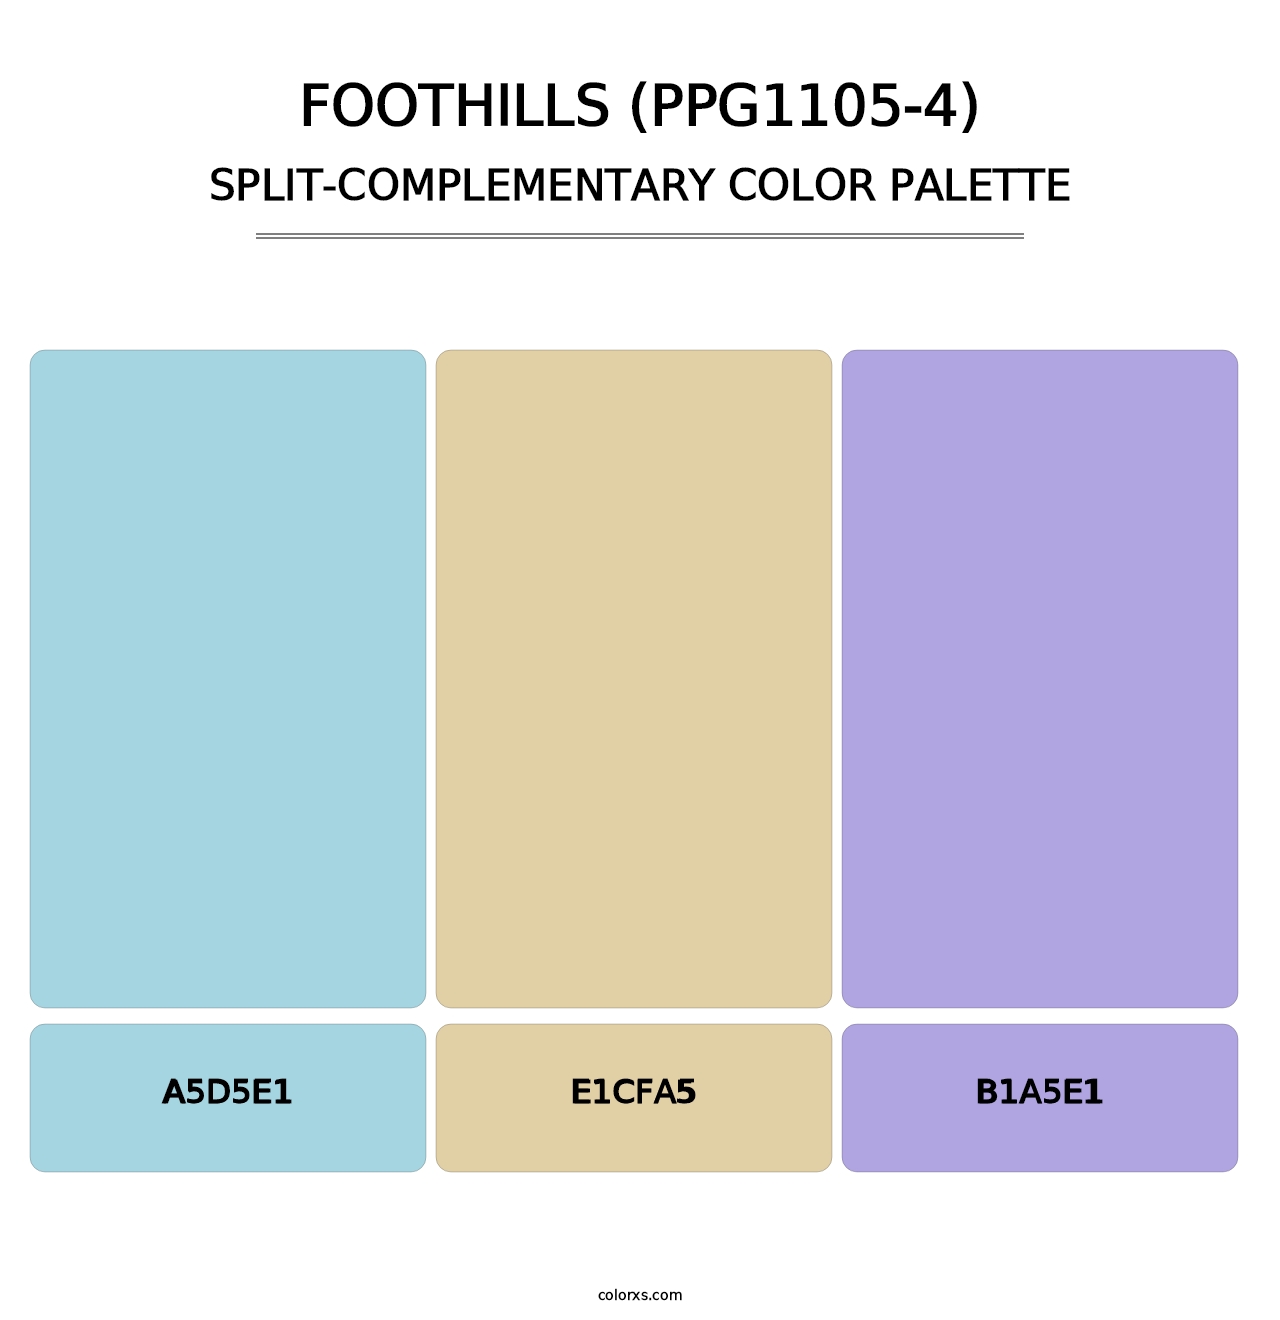 Foothills (PPG1105-4) - Split-Complementary Color Palette